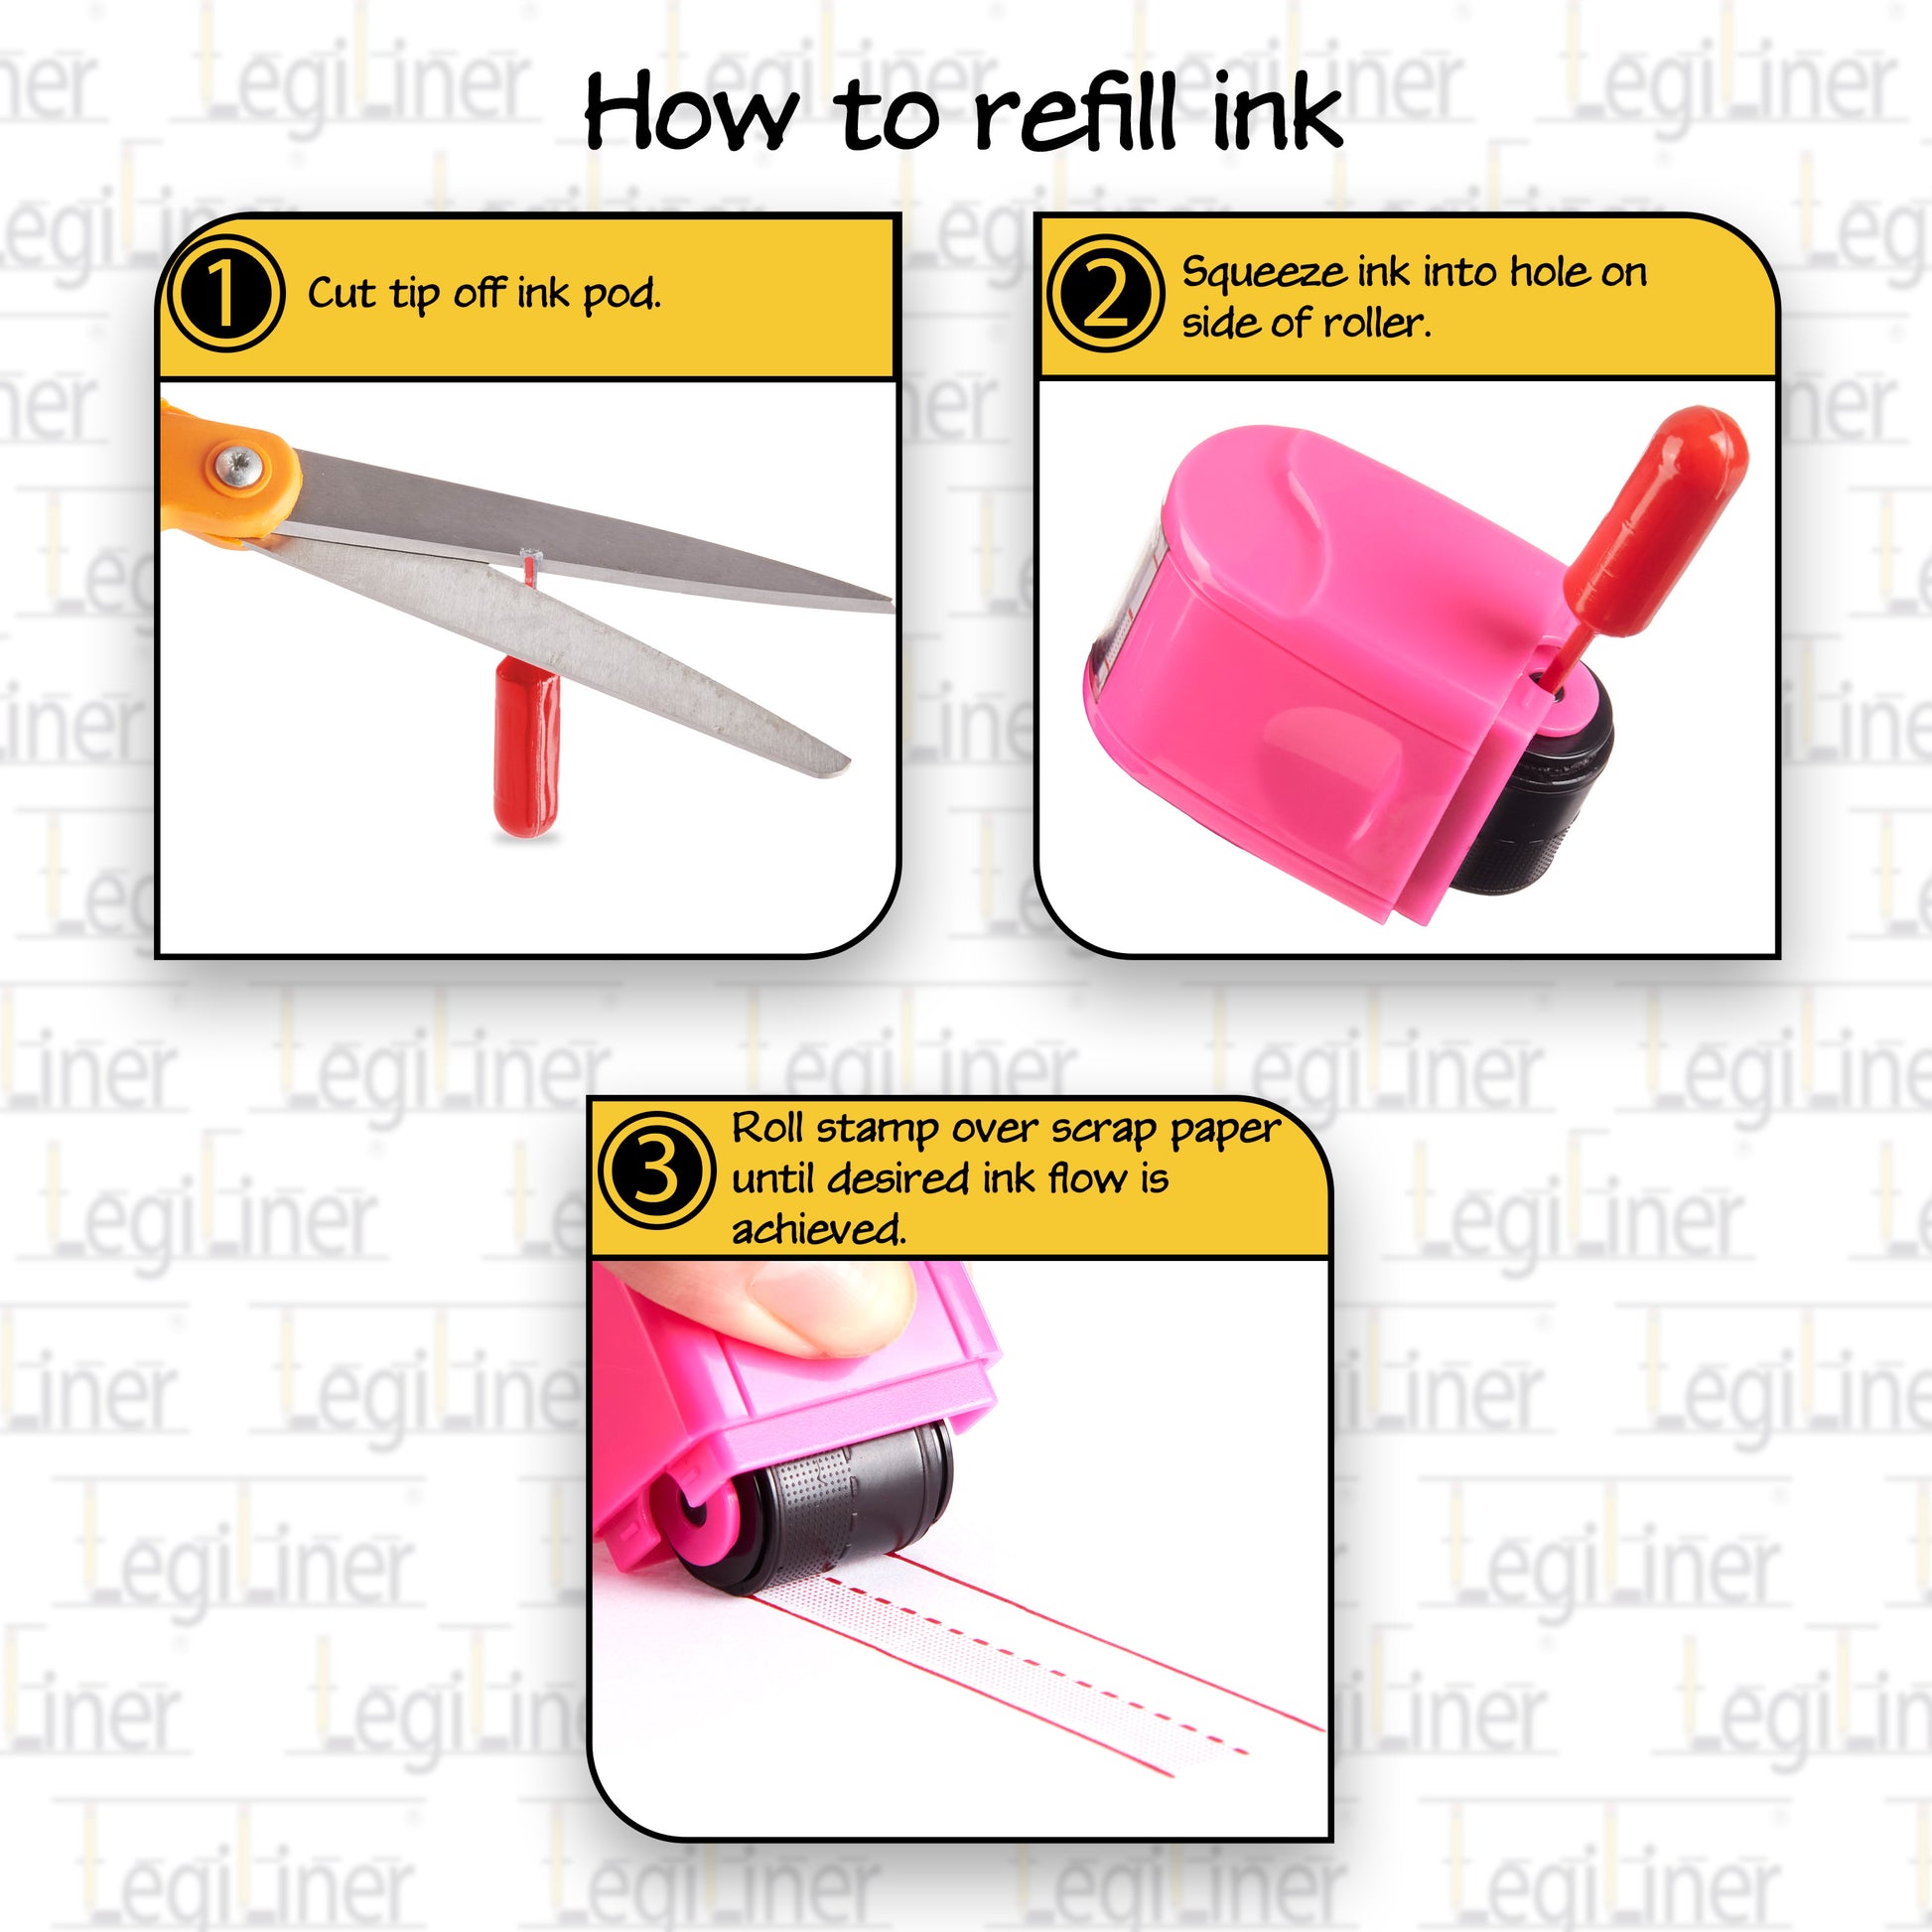 LegiLiner Self-Inking Teacher Stamps & Handwriting Lines Roller Stamps